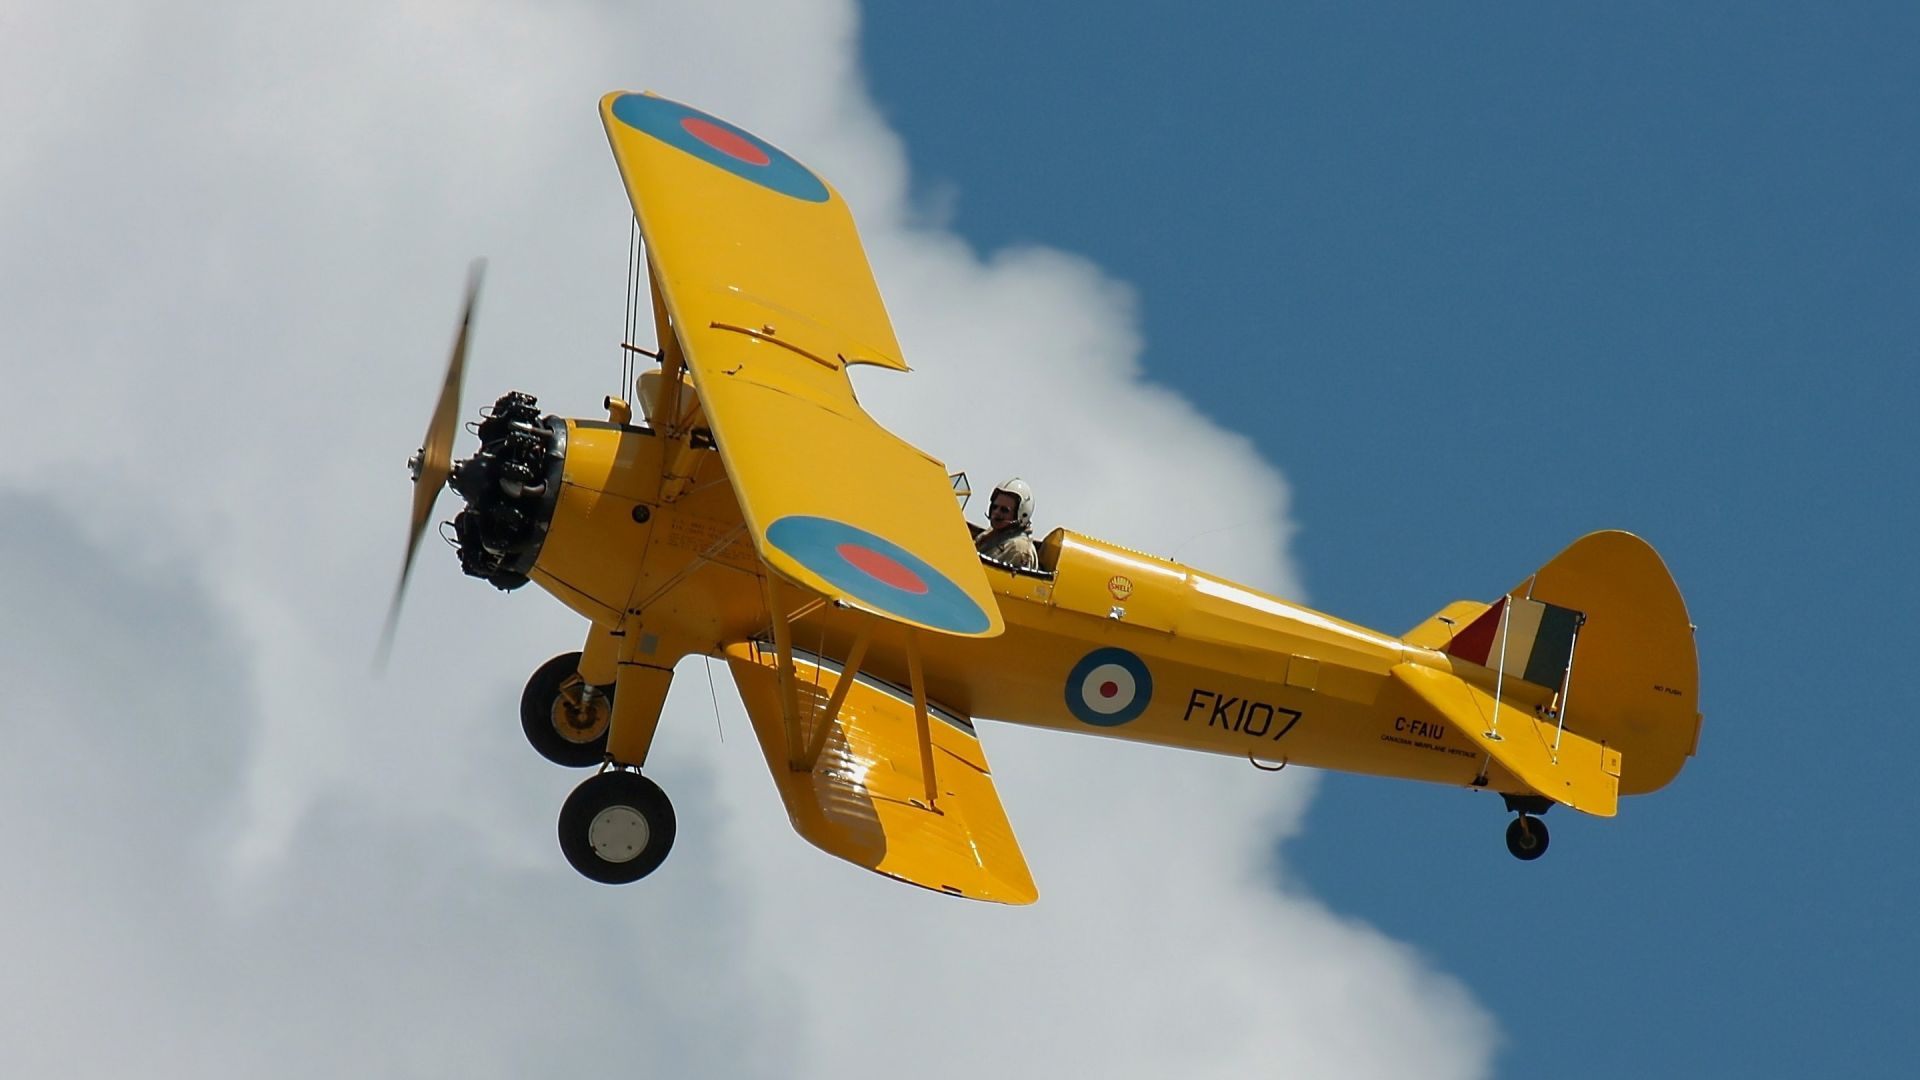 Desktop Wallpaper Yellow Aircraft, Sky, Hd Image, Picture, Background, K2k6  C